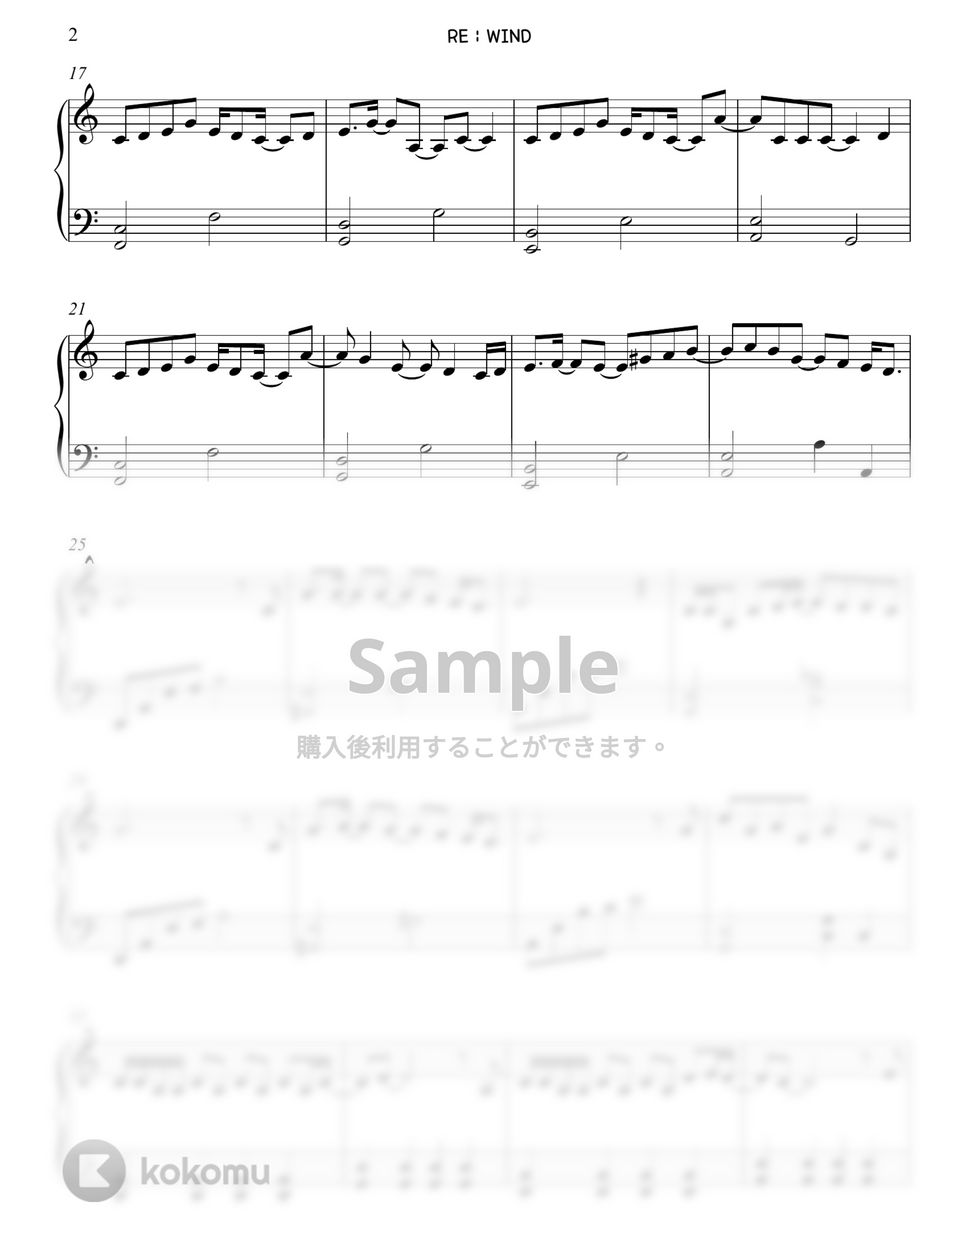 ISEGYE IDOL (이세계아이돌) - RE : WIND (難易度チェルニー100) by Gloria L.